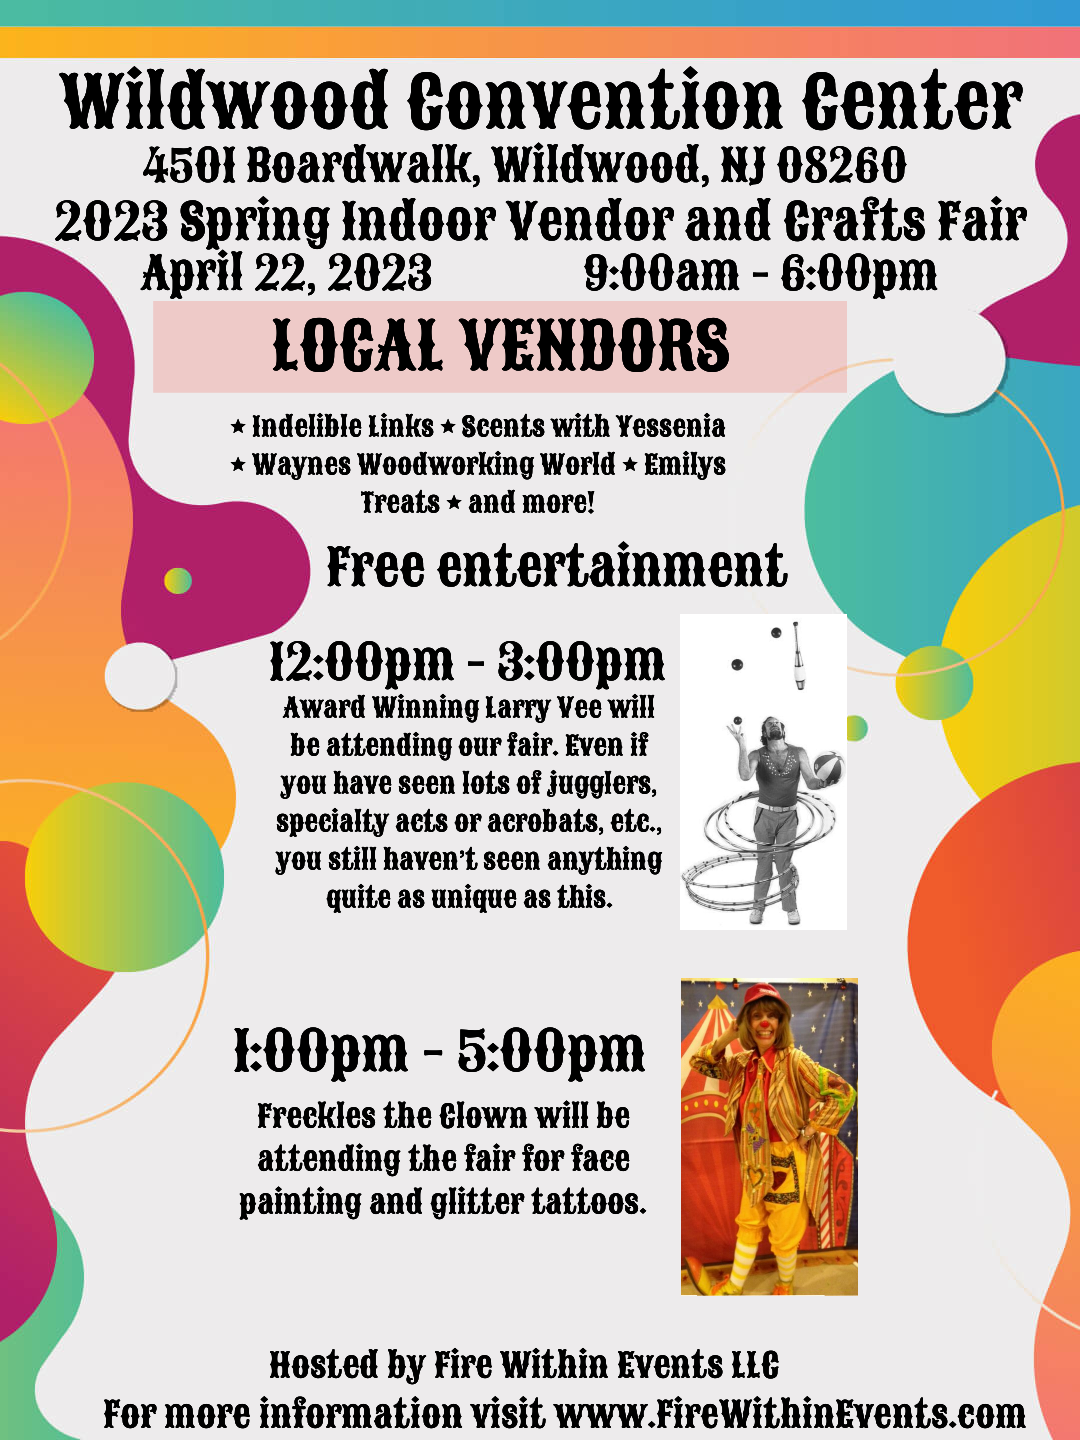 Spring Indoor Vendor and crafts Fair